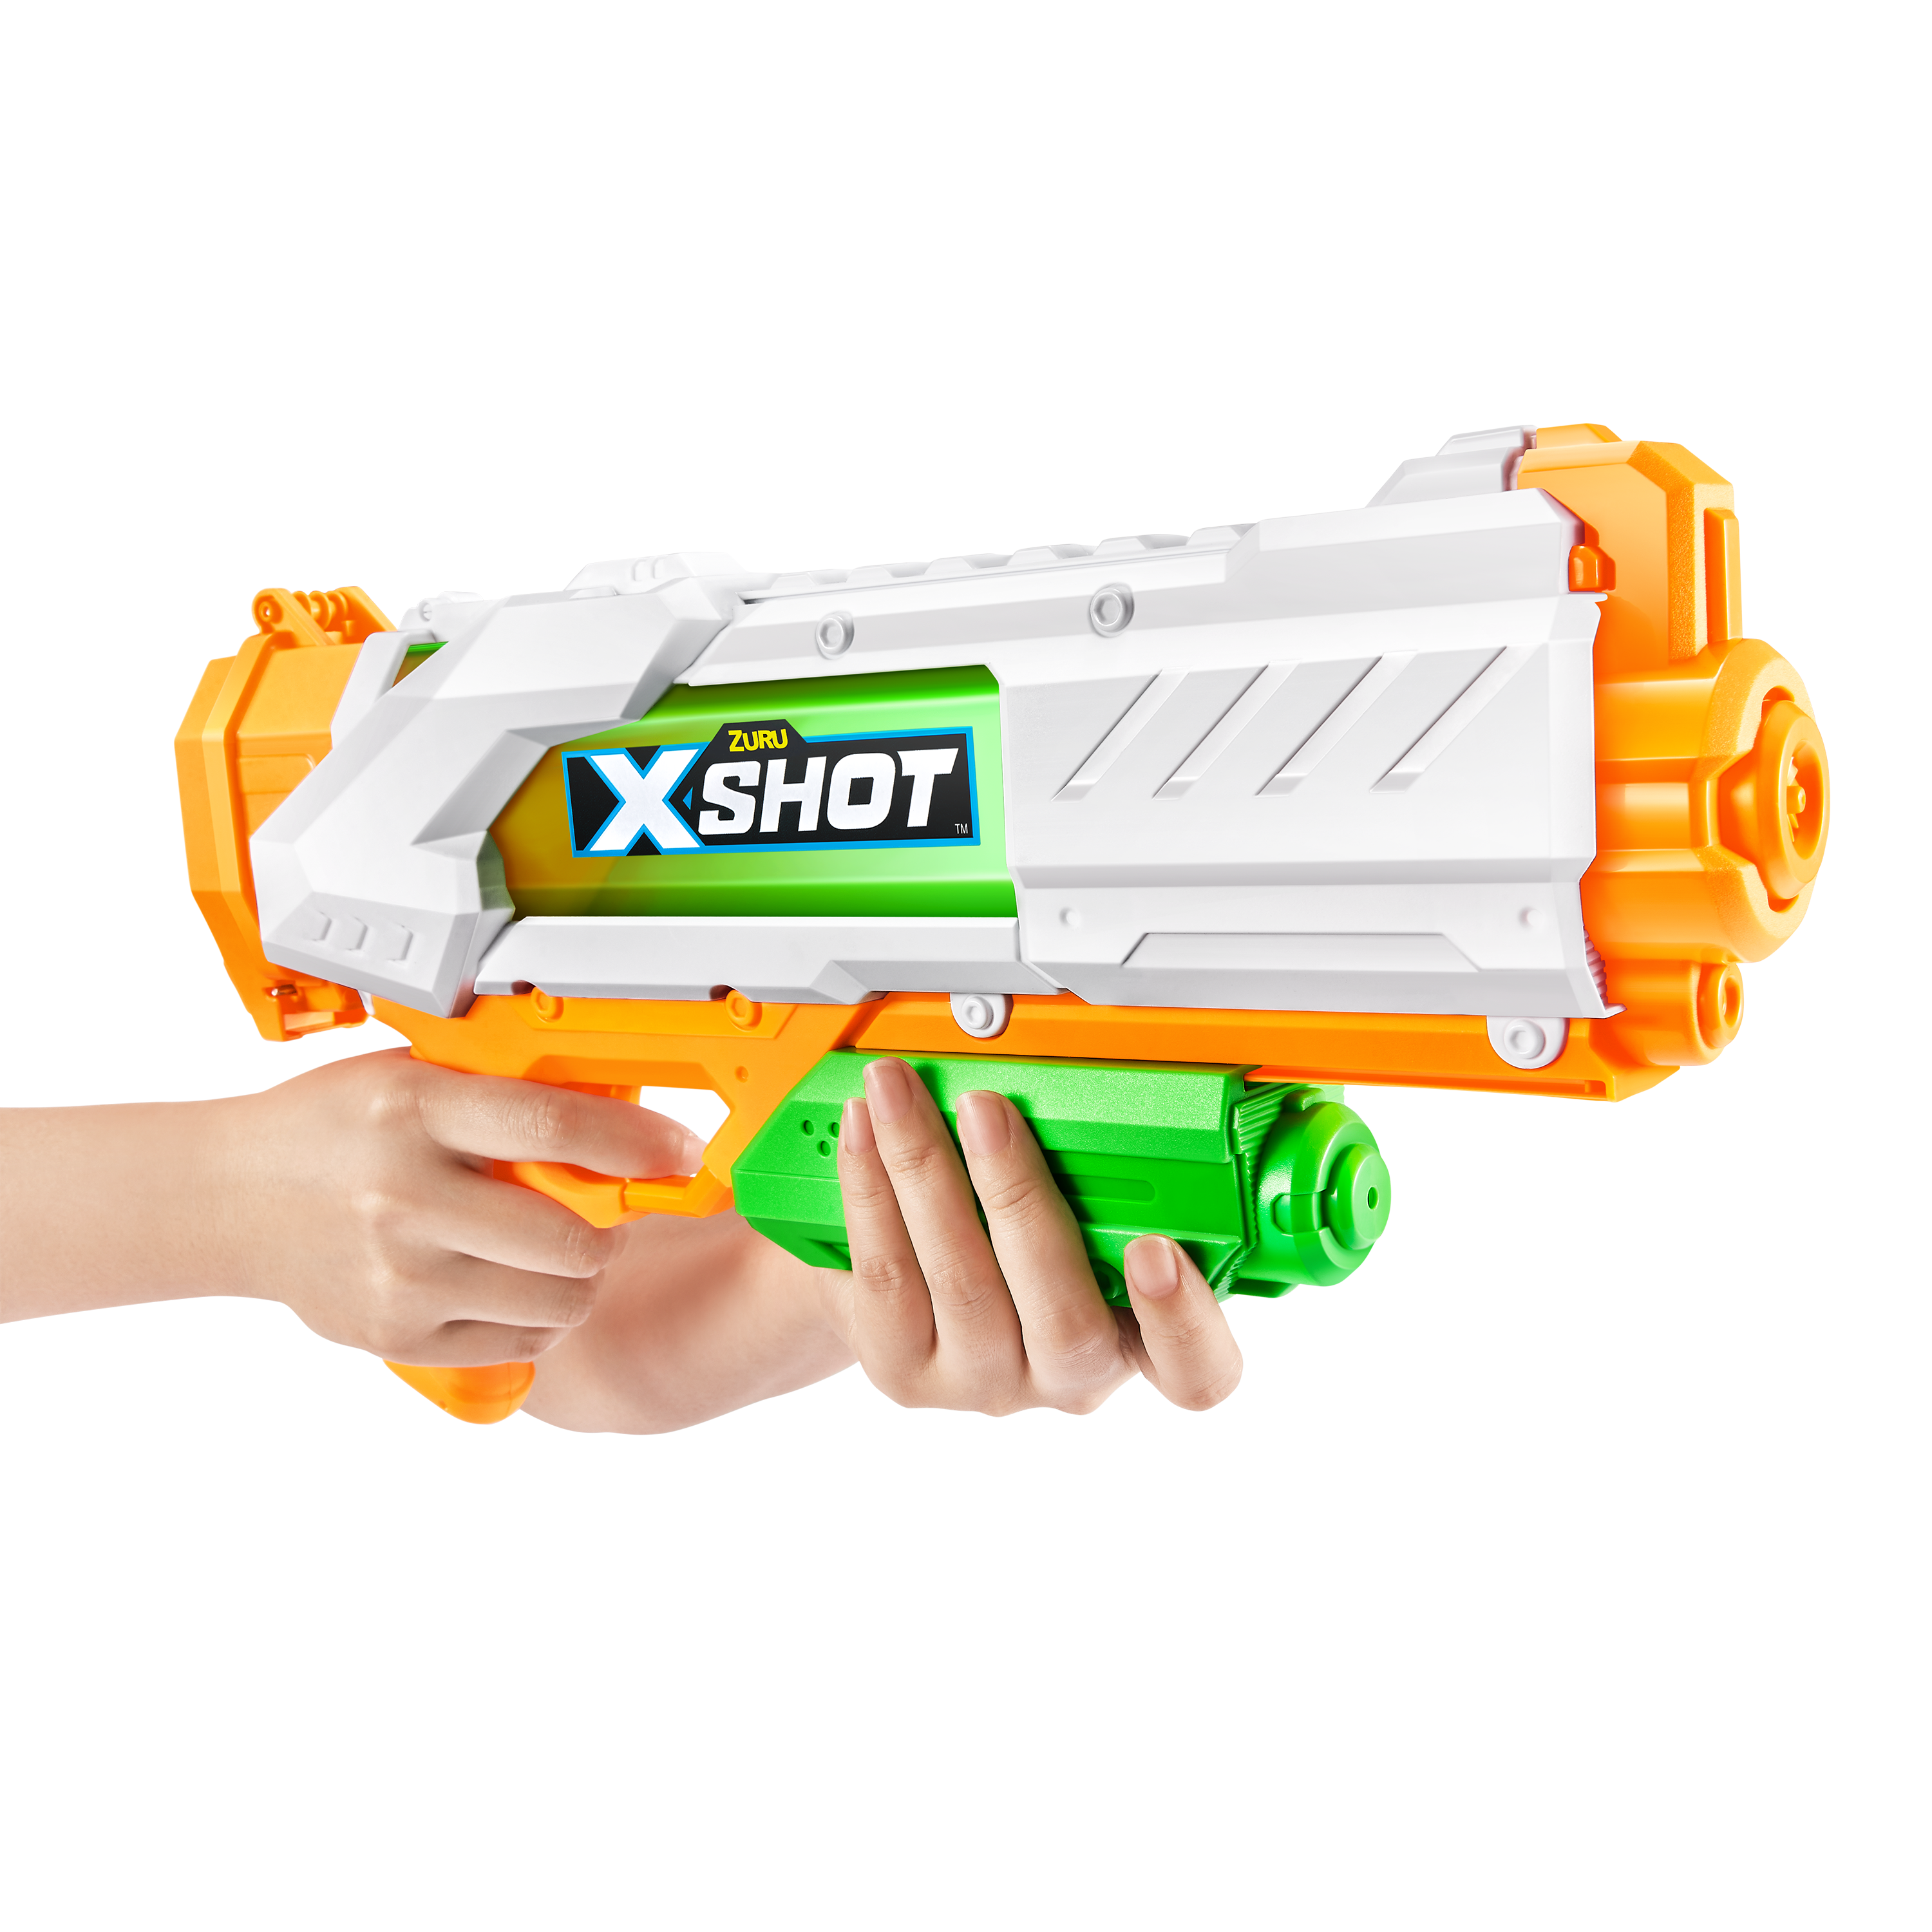 X-Shot Water Warfare Fast-Fill Water Blaster by ZURU - image 4 of 10